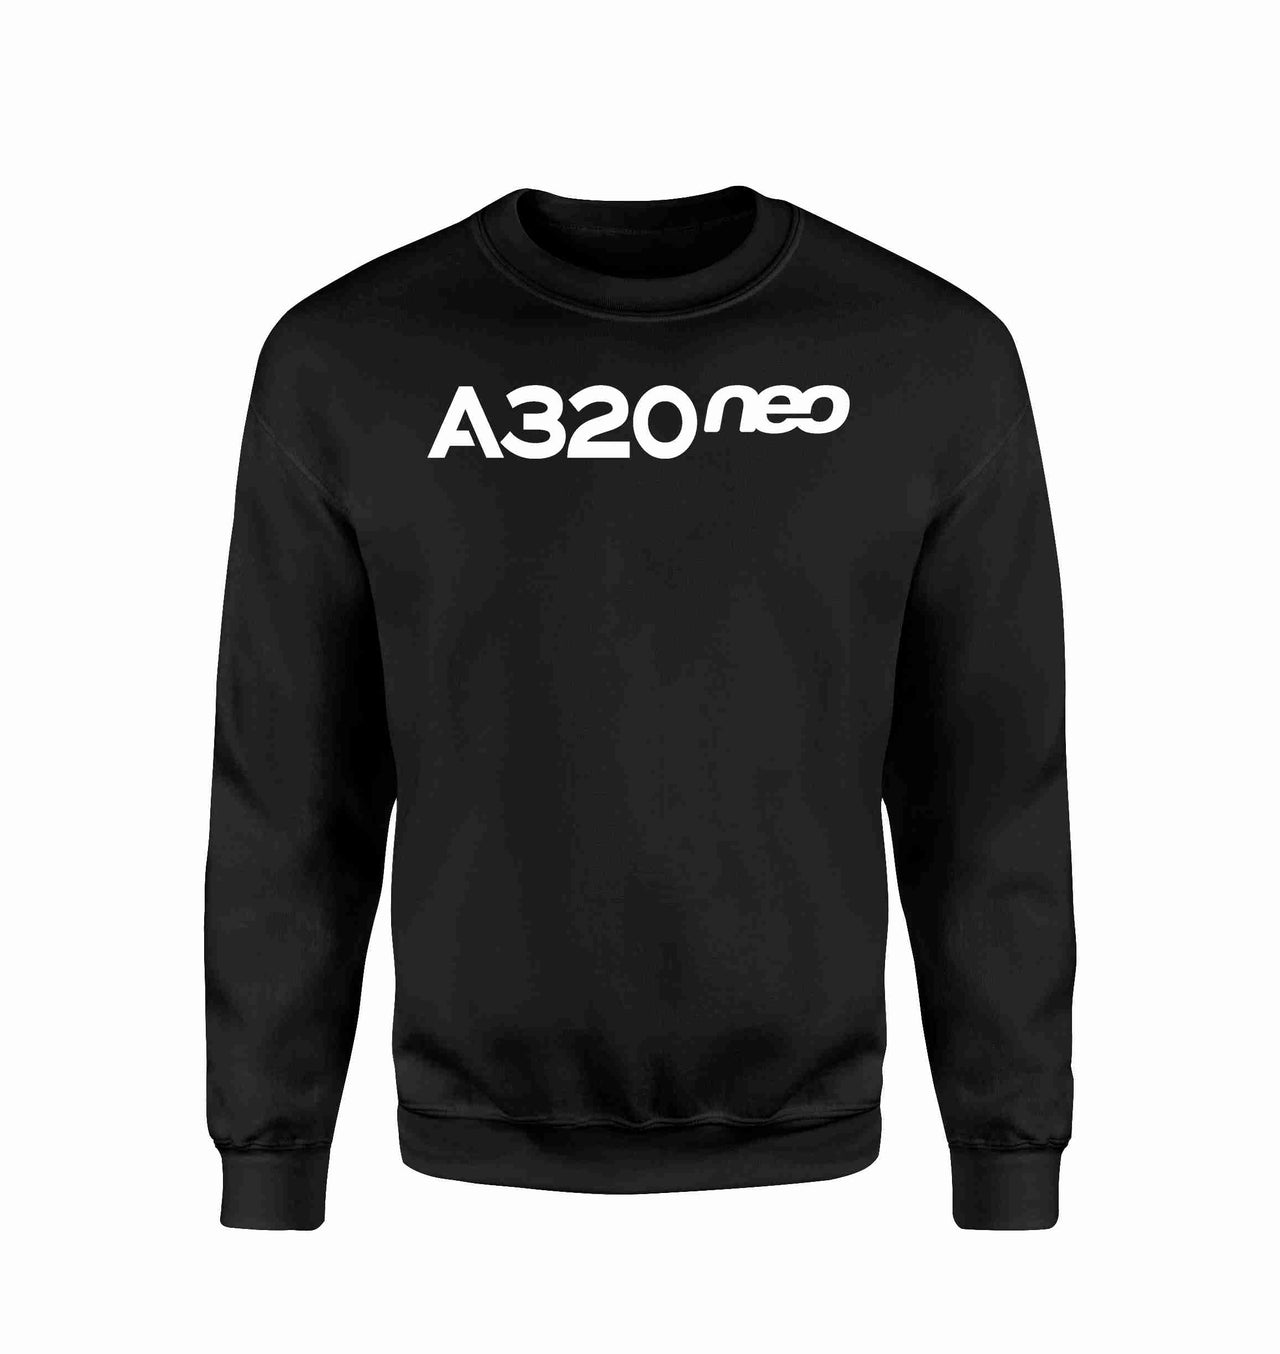 A320neo & Text Designed Sweatshirts